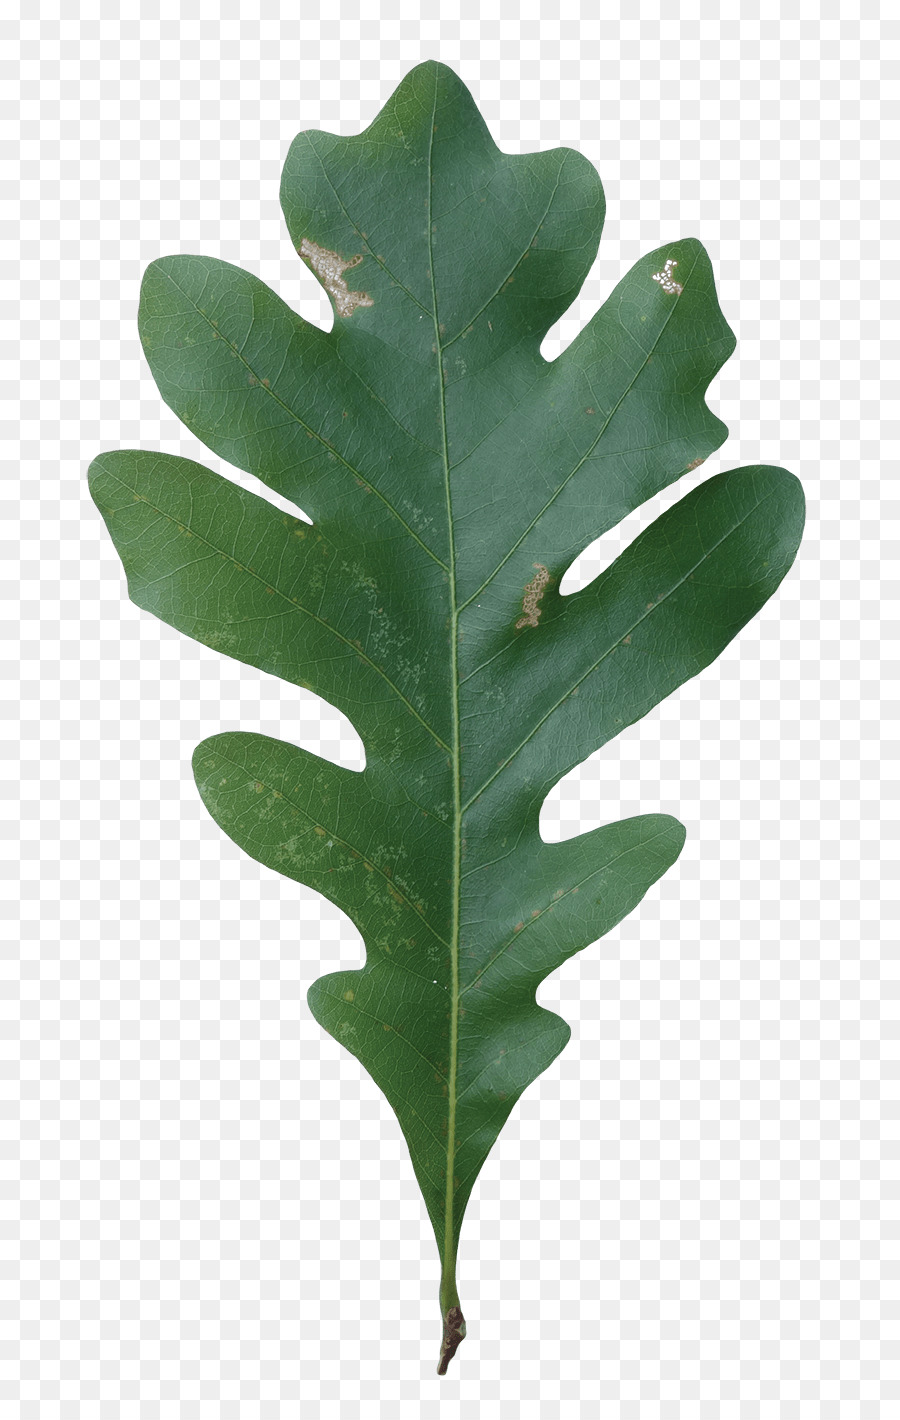 Oak Tree Leaf clipart.